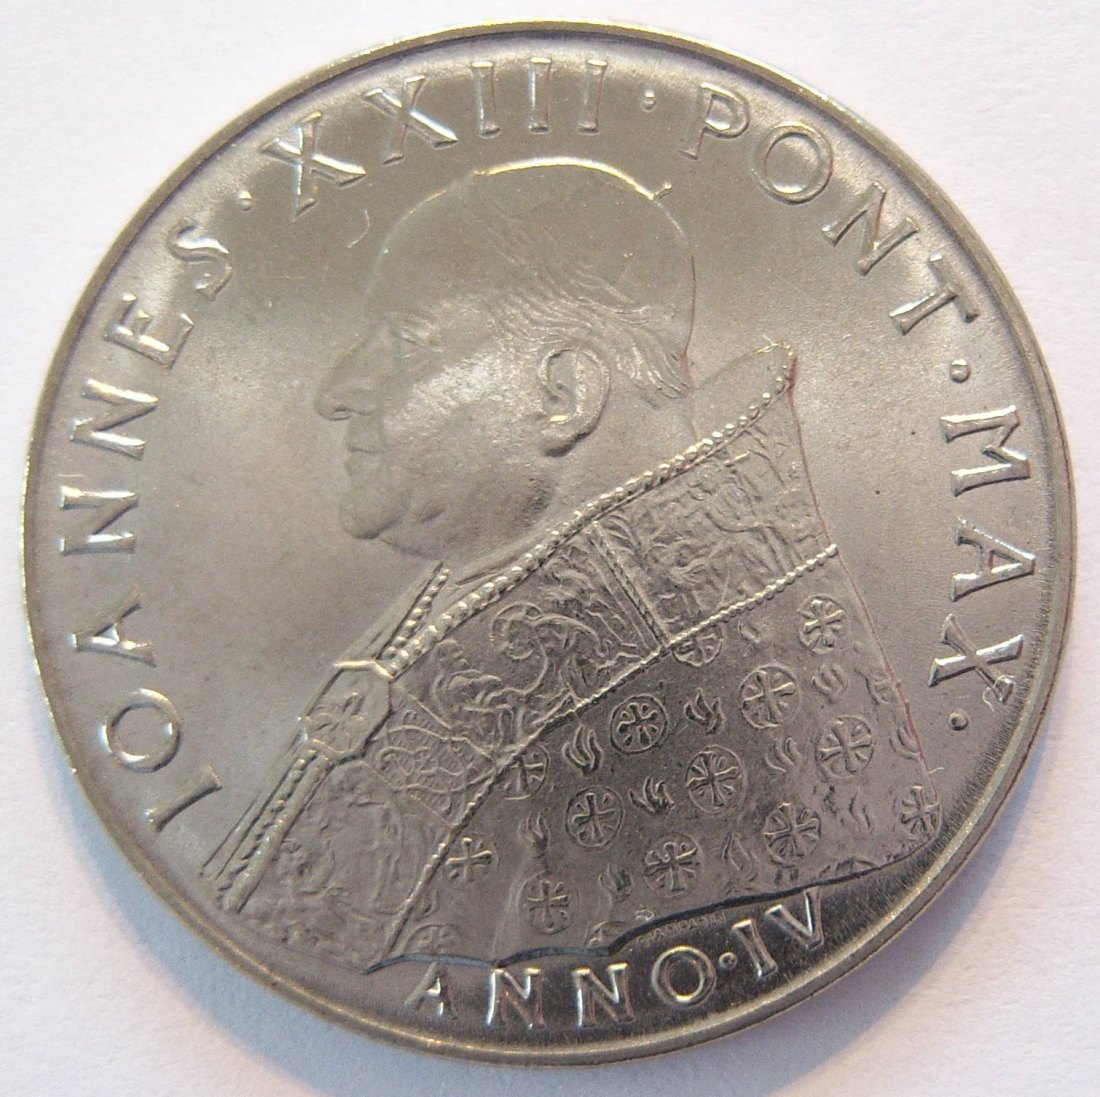  Vatikan 100 Lire 1962   